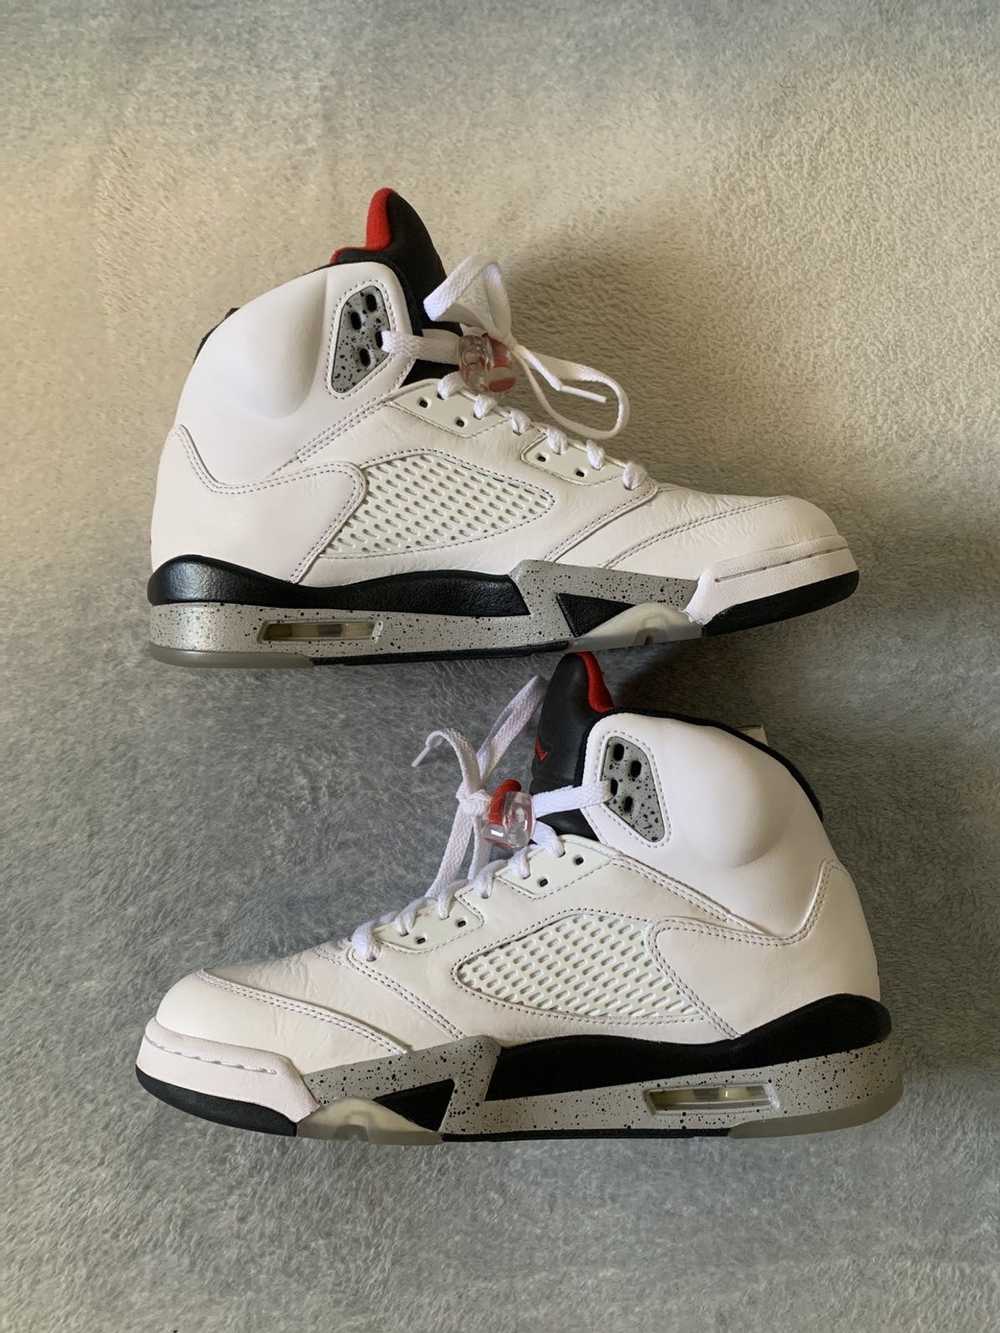 Jordan Brand × Nike Jordan Retro 5 white cement - image 2